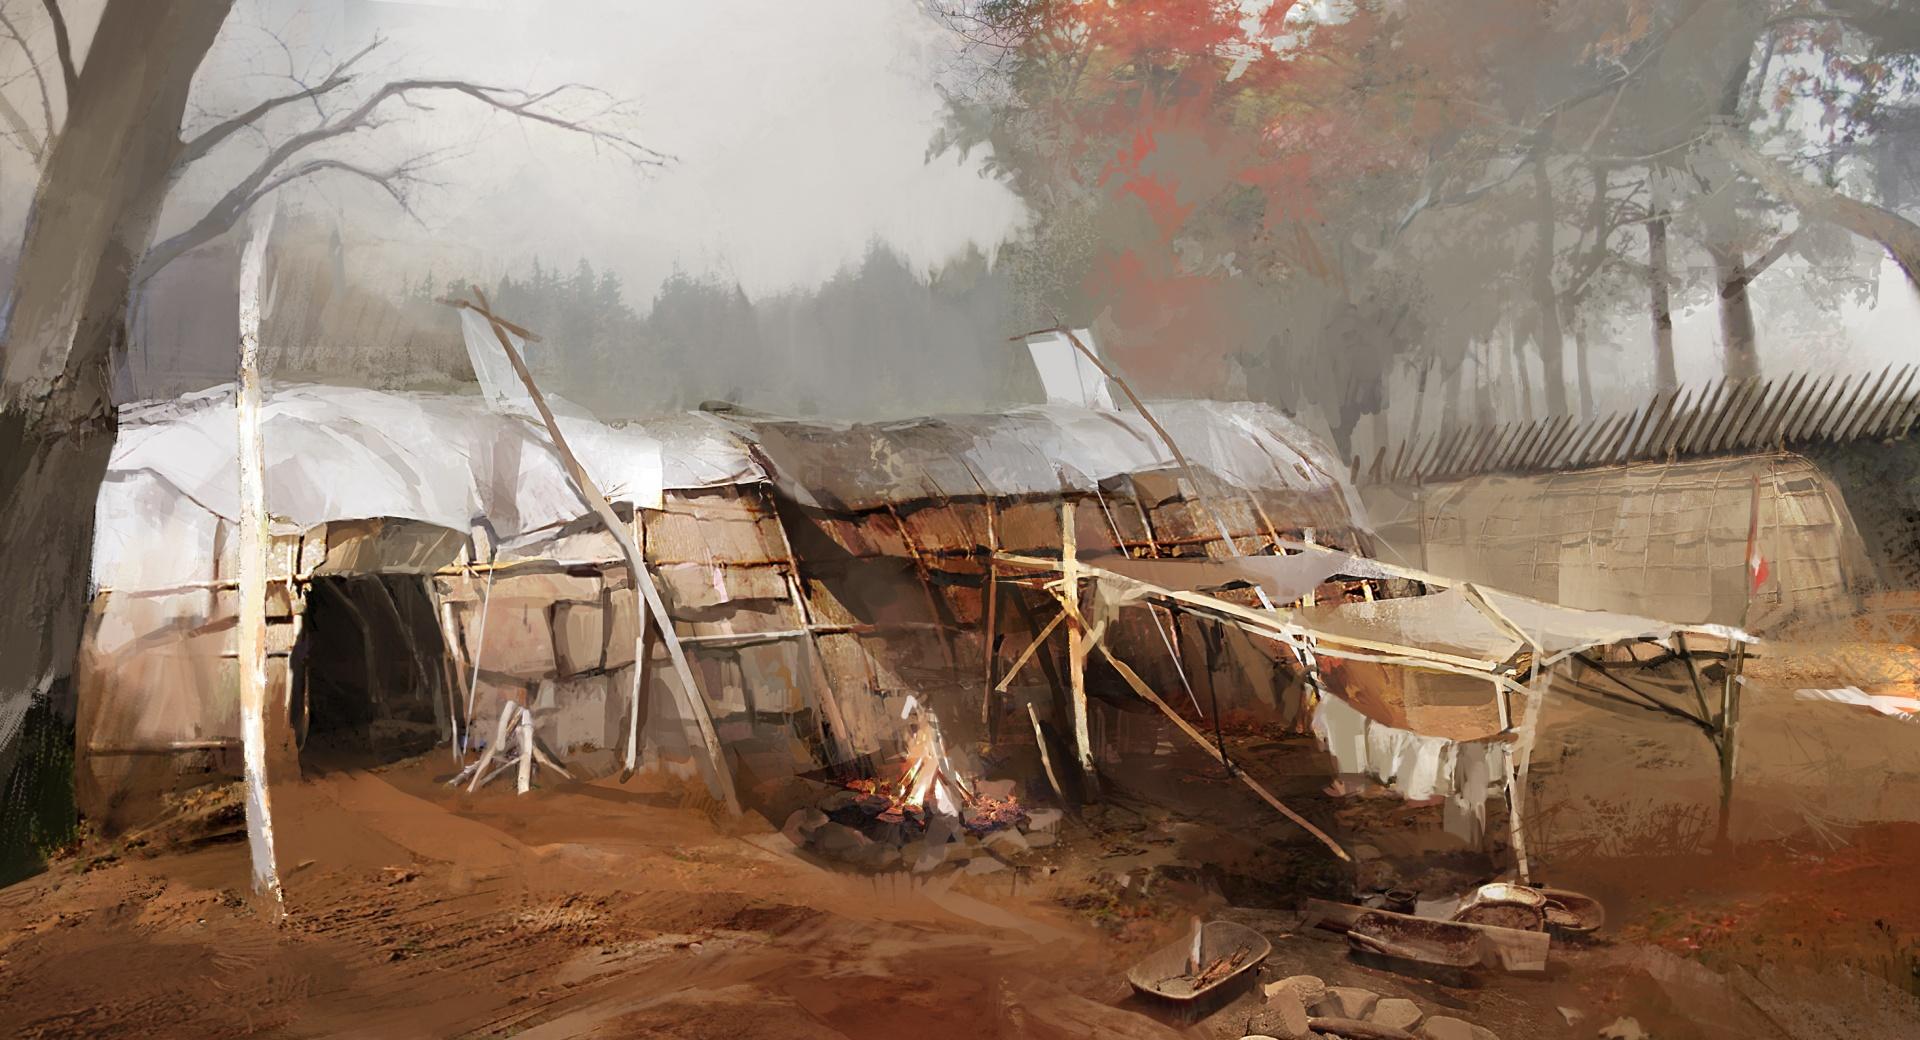 Assassins Creed III Mohawk Village at 2048 x 2048 iPad size wallpapers HD quality